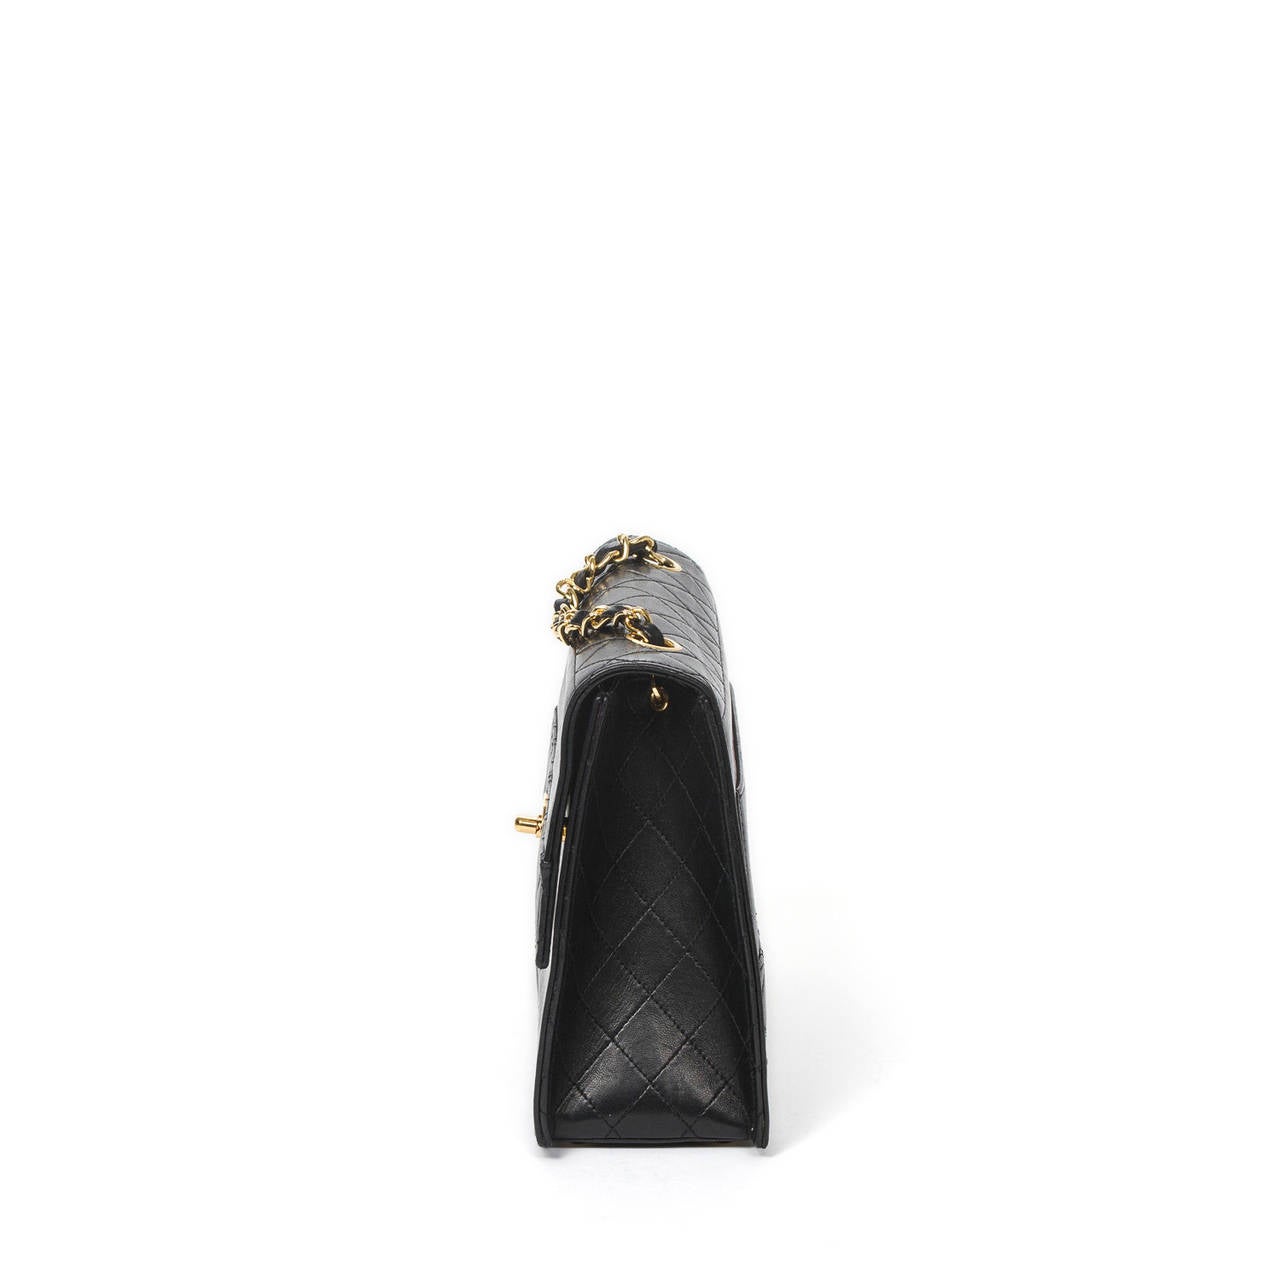 Chanel Vintage Flap Shoulder Bag Black Leather In Excellent Condition For Sale In Dublin, IE